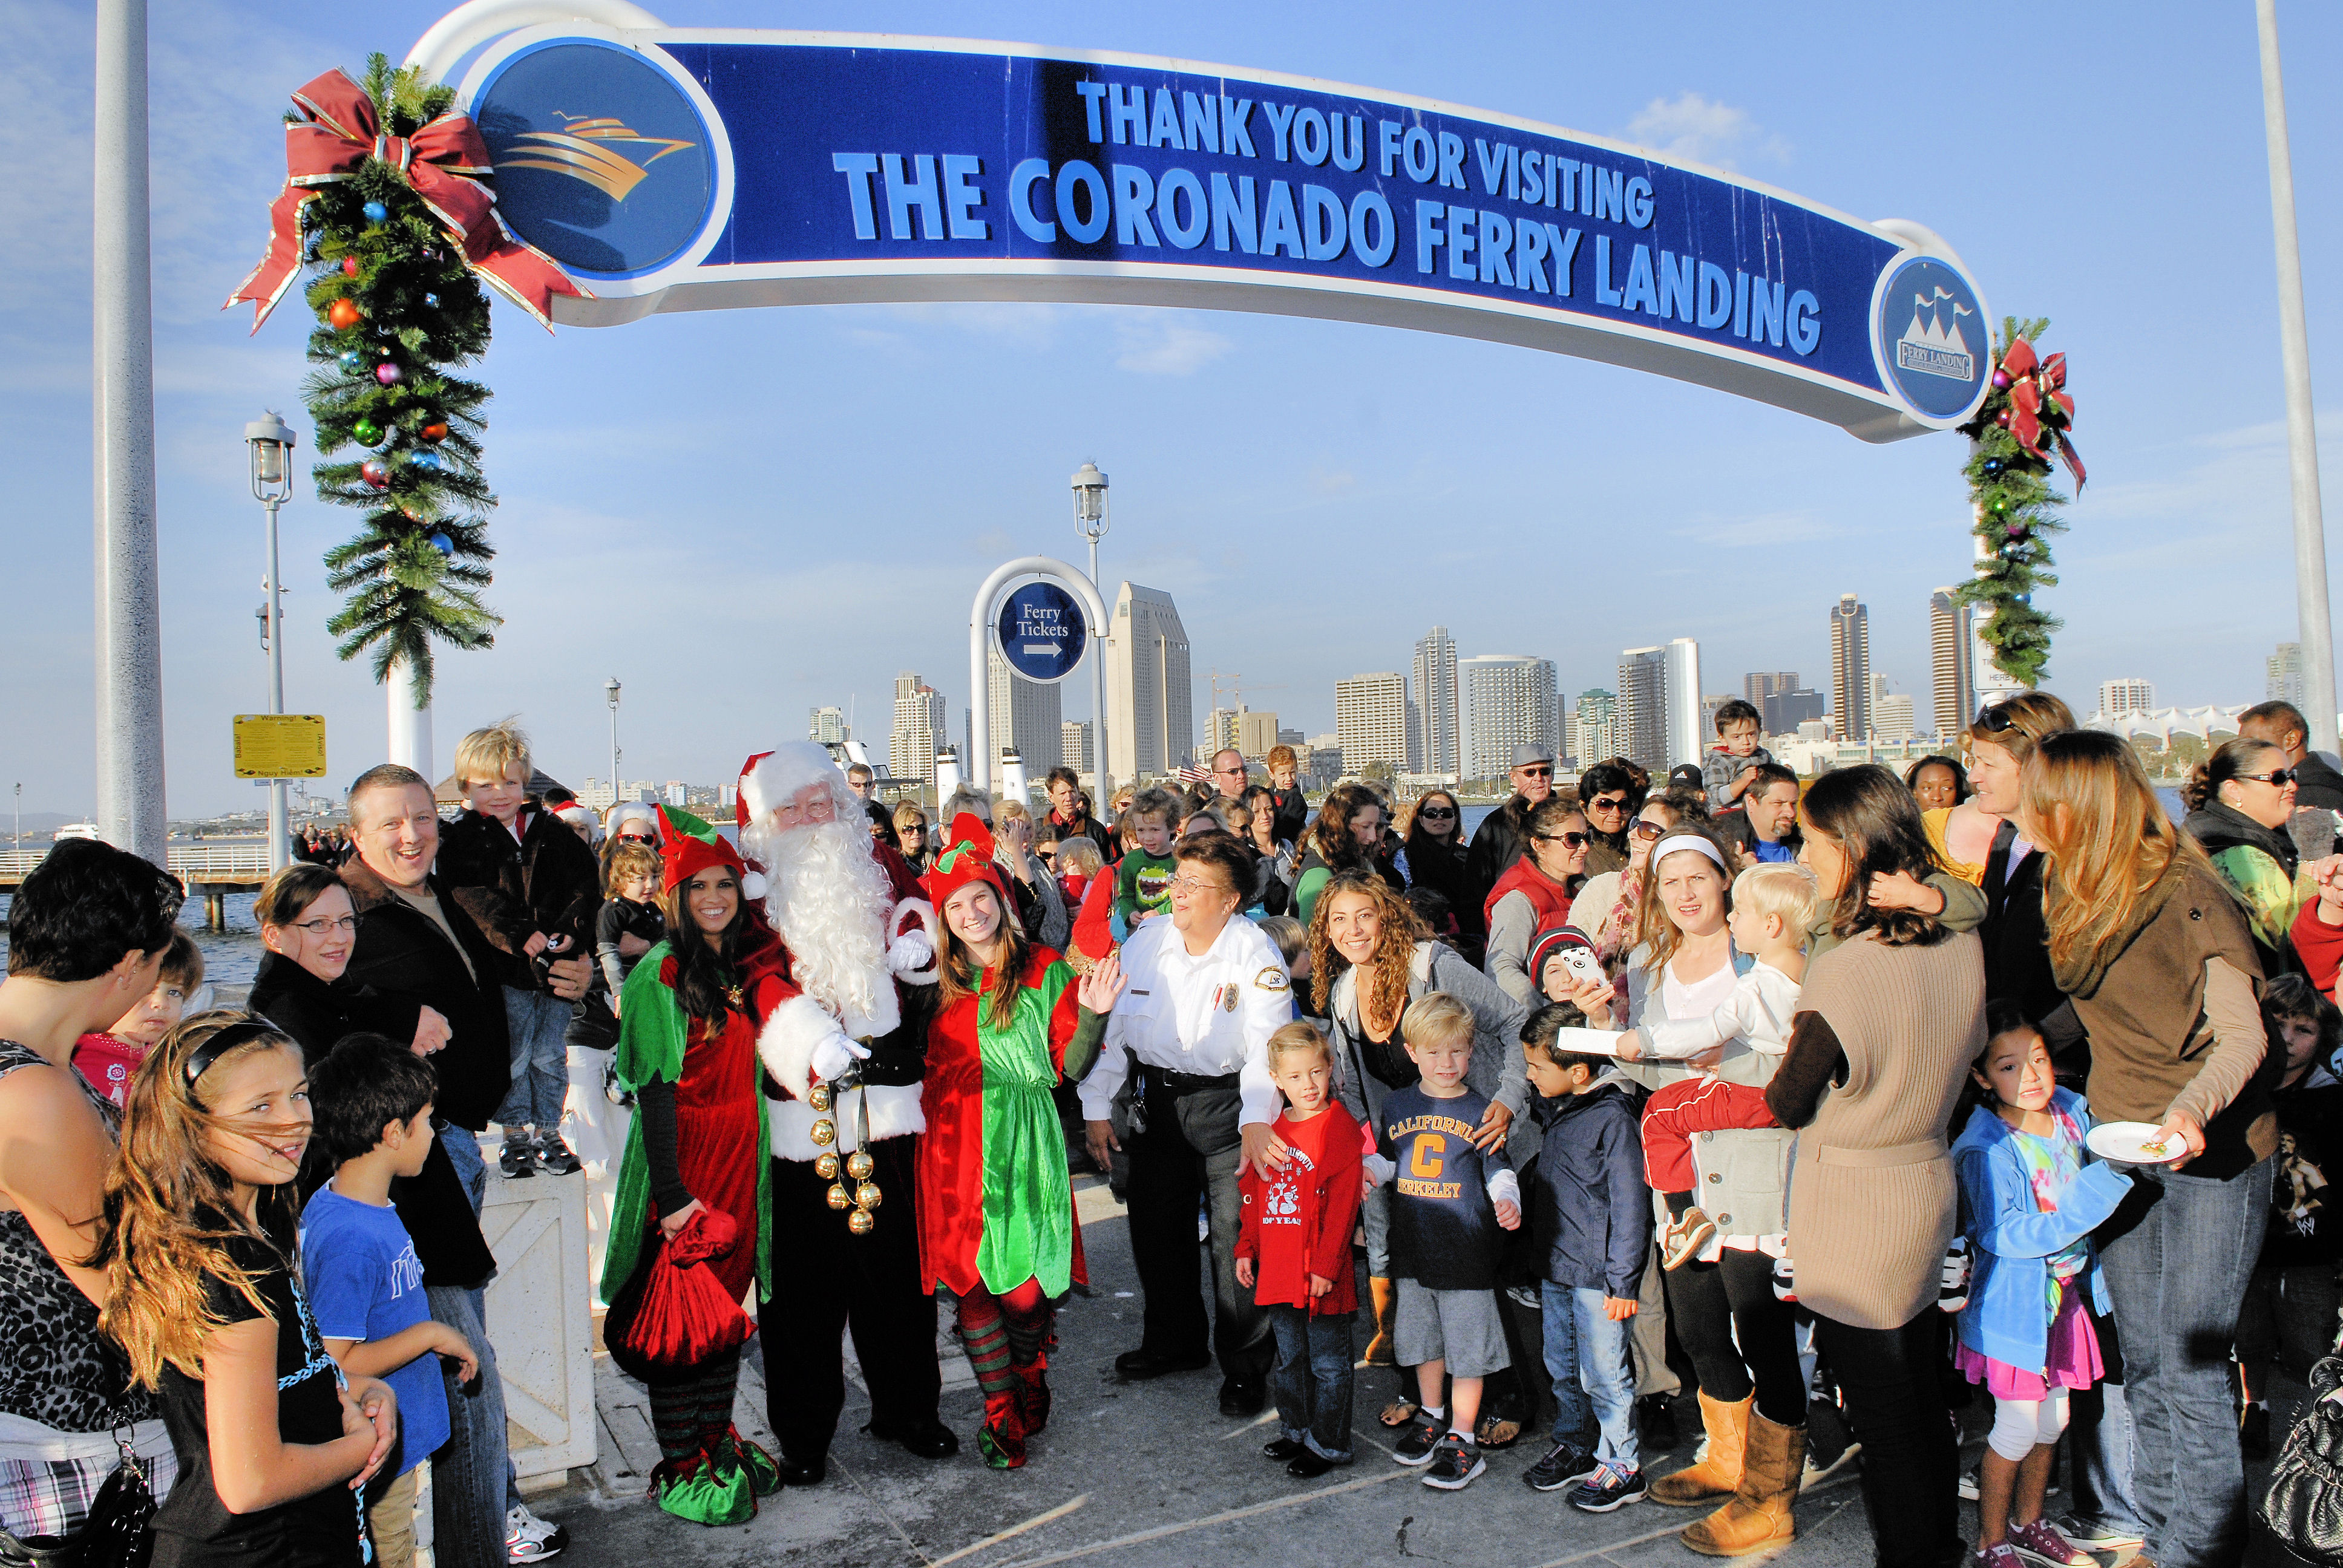 Santa Claus' festive arrival at the Coronado Ferry Landing!